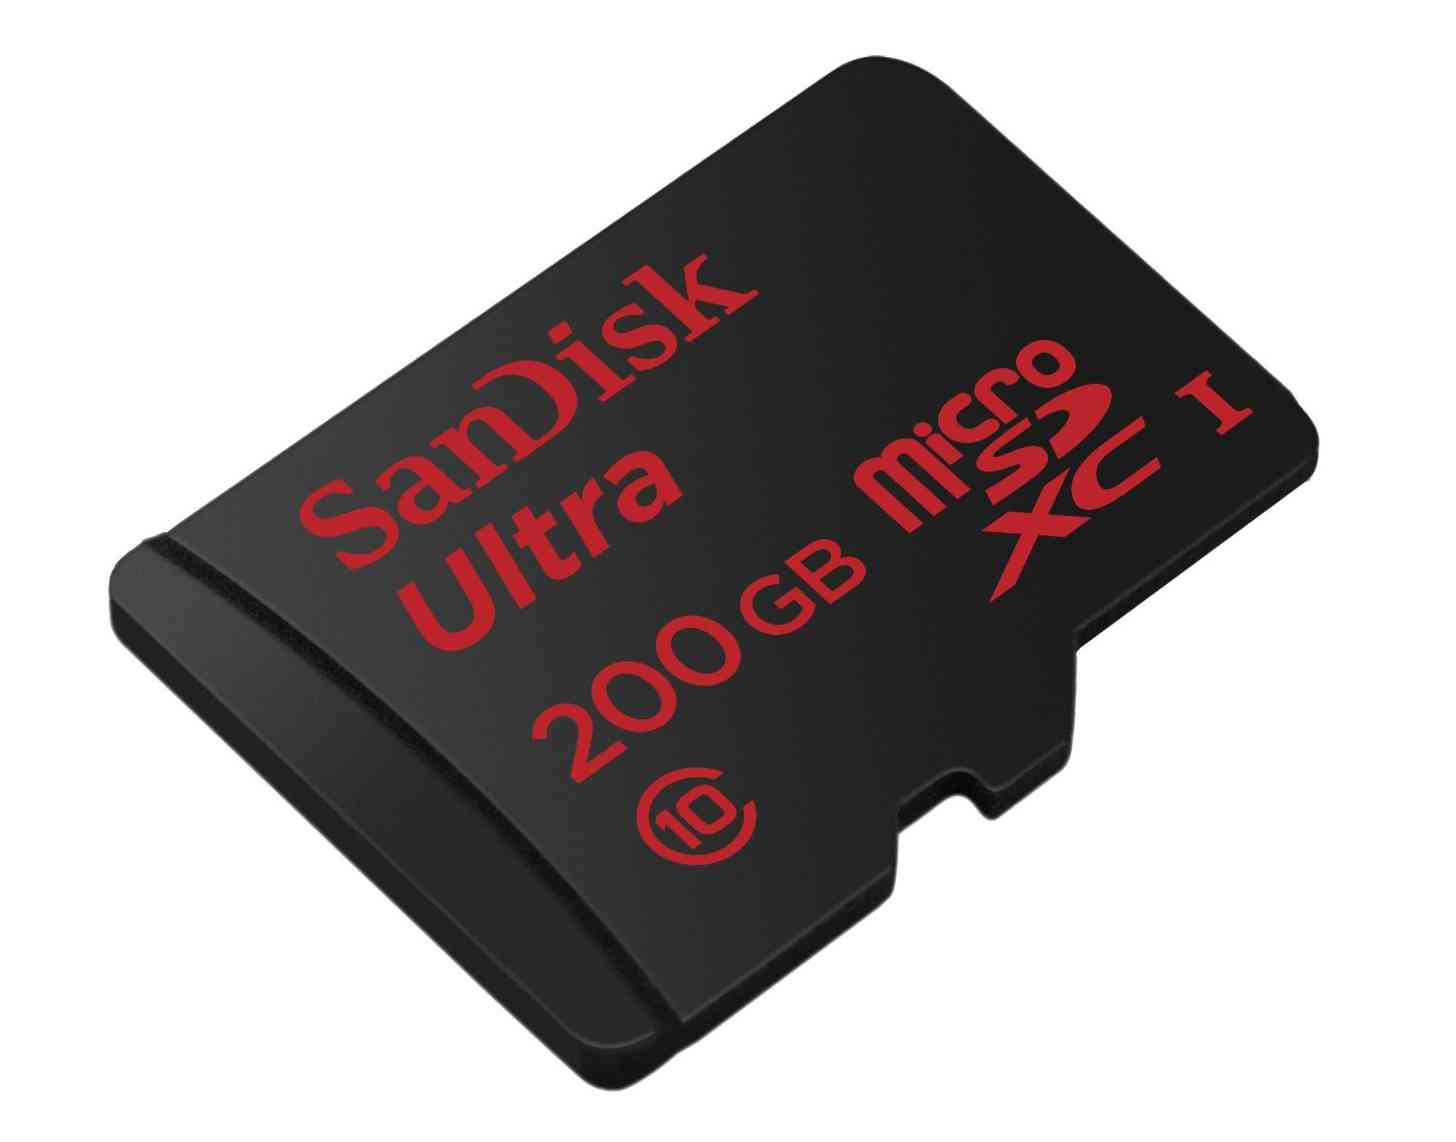 SanDisk 200GB microSD card official